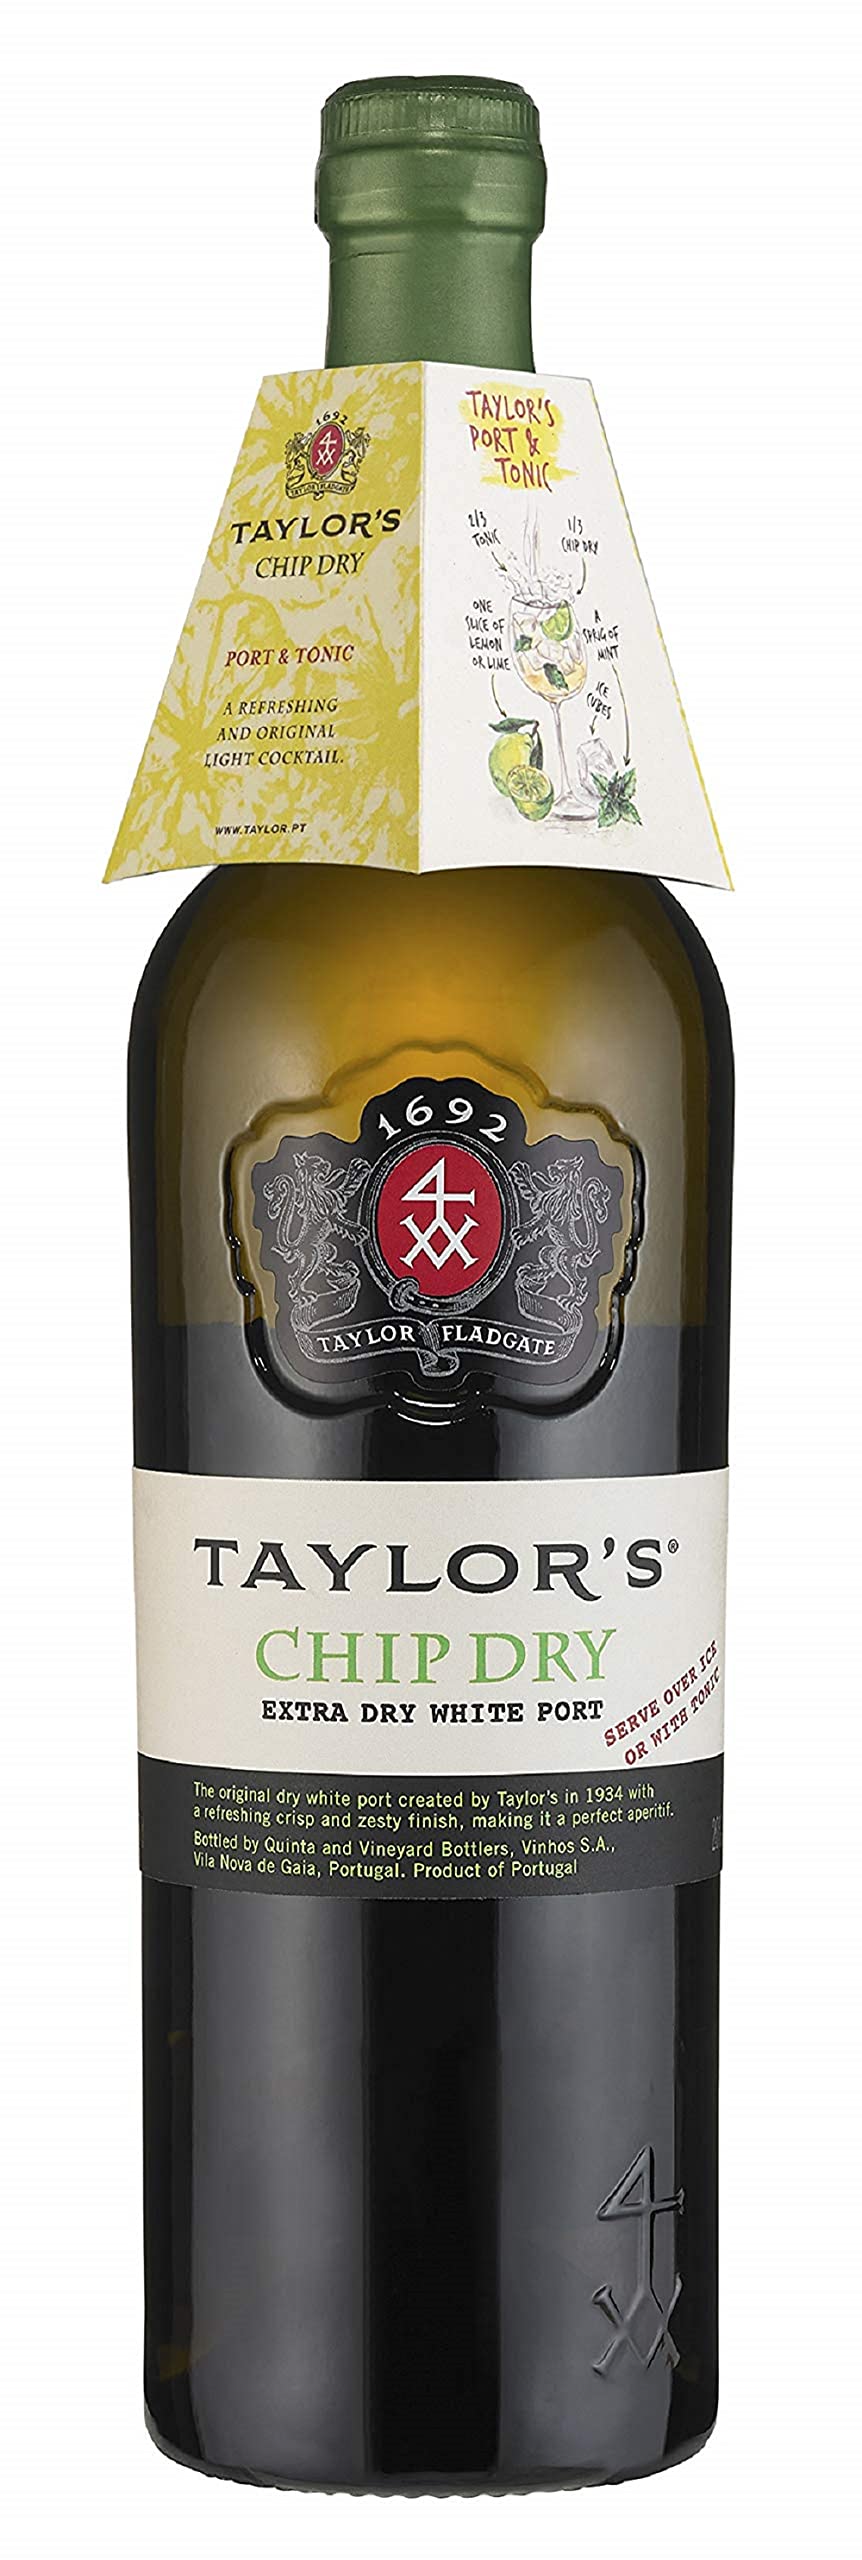 Vinho do Porto Branco Taylor’s Chip Dry 750ml
